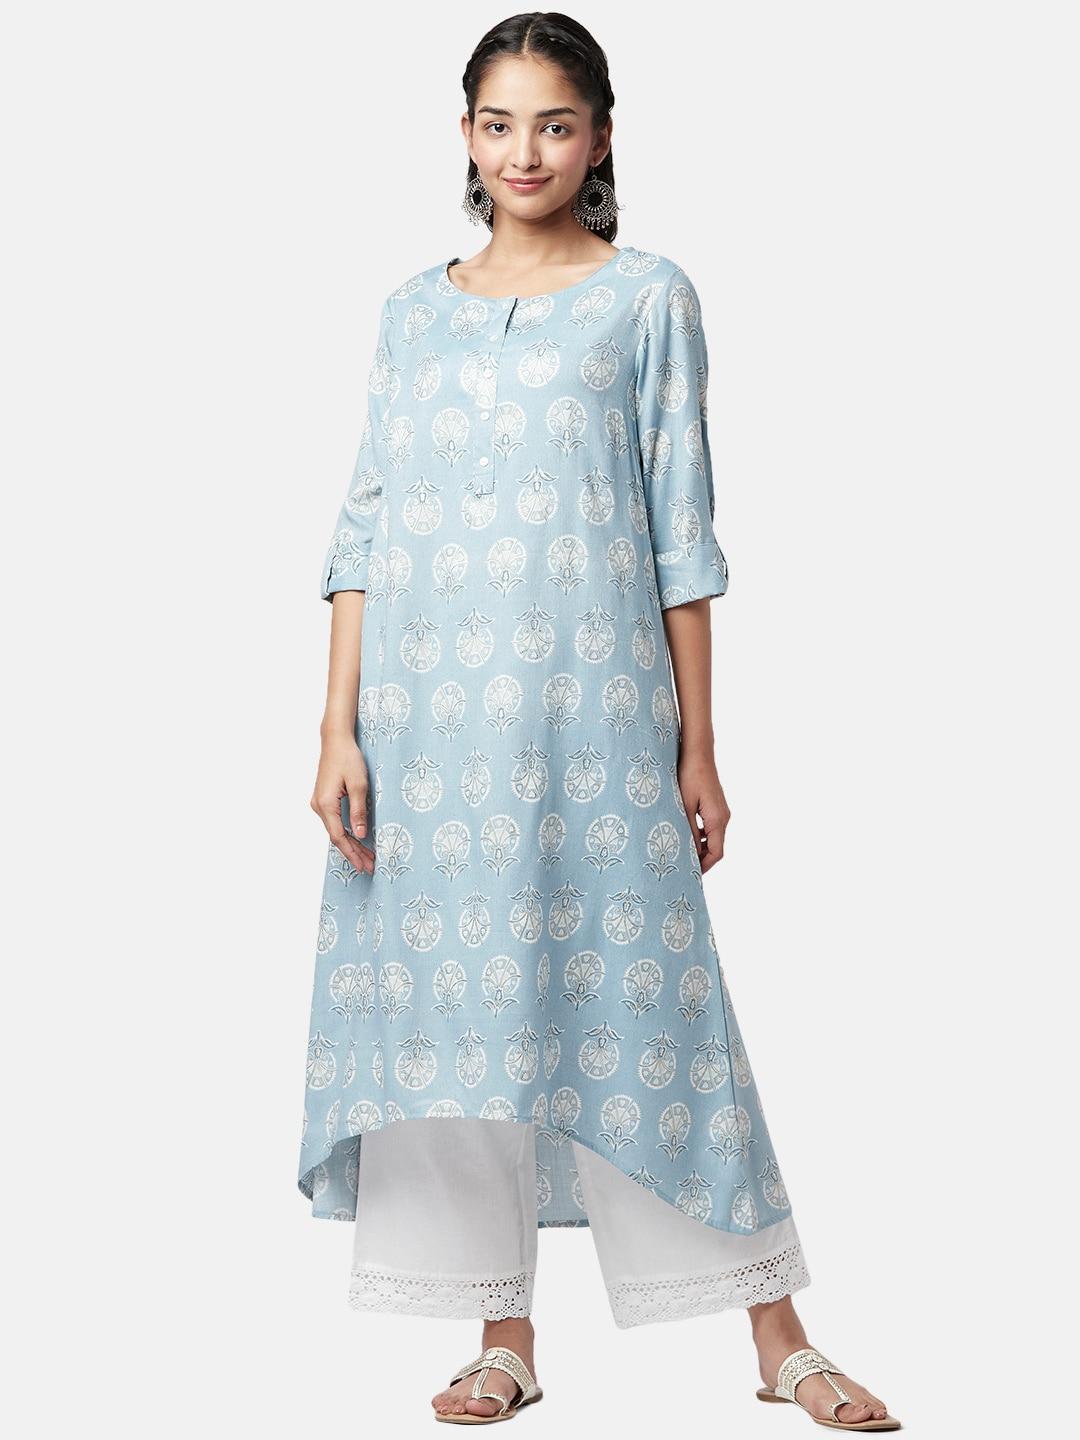 yu by pantaloons women ethnic motifs printed kurta